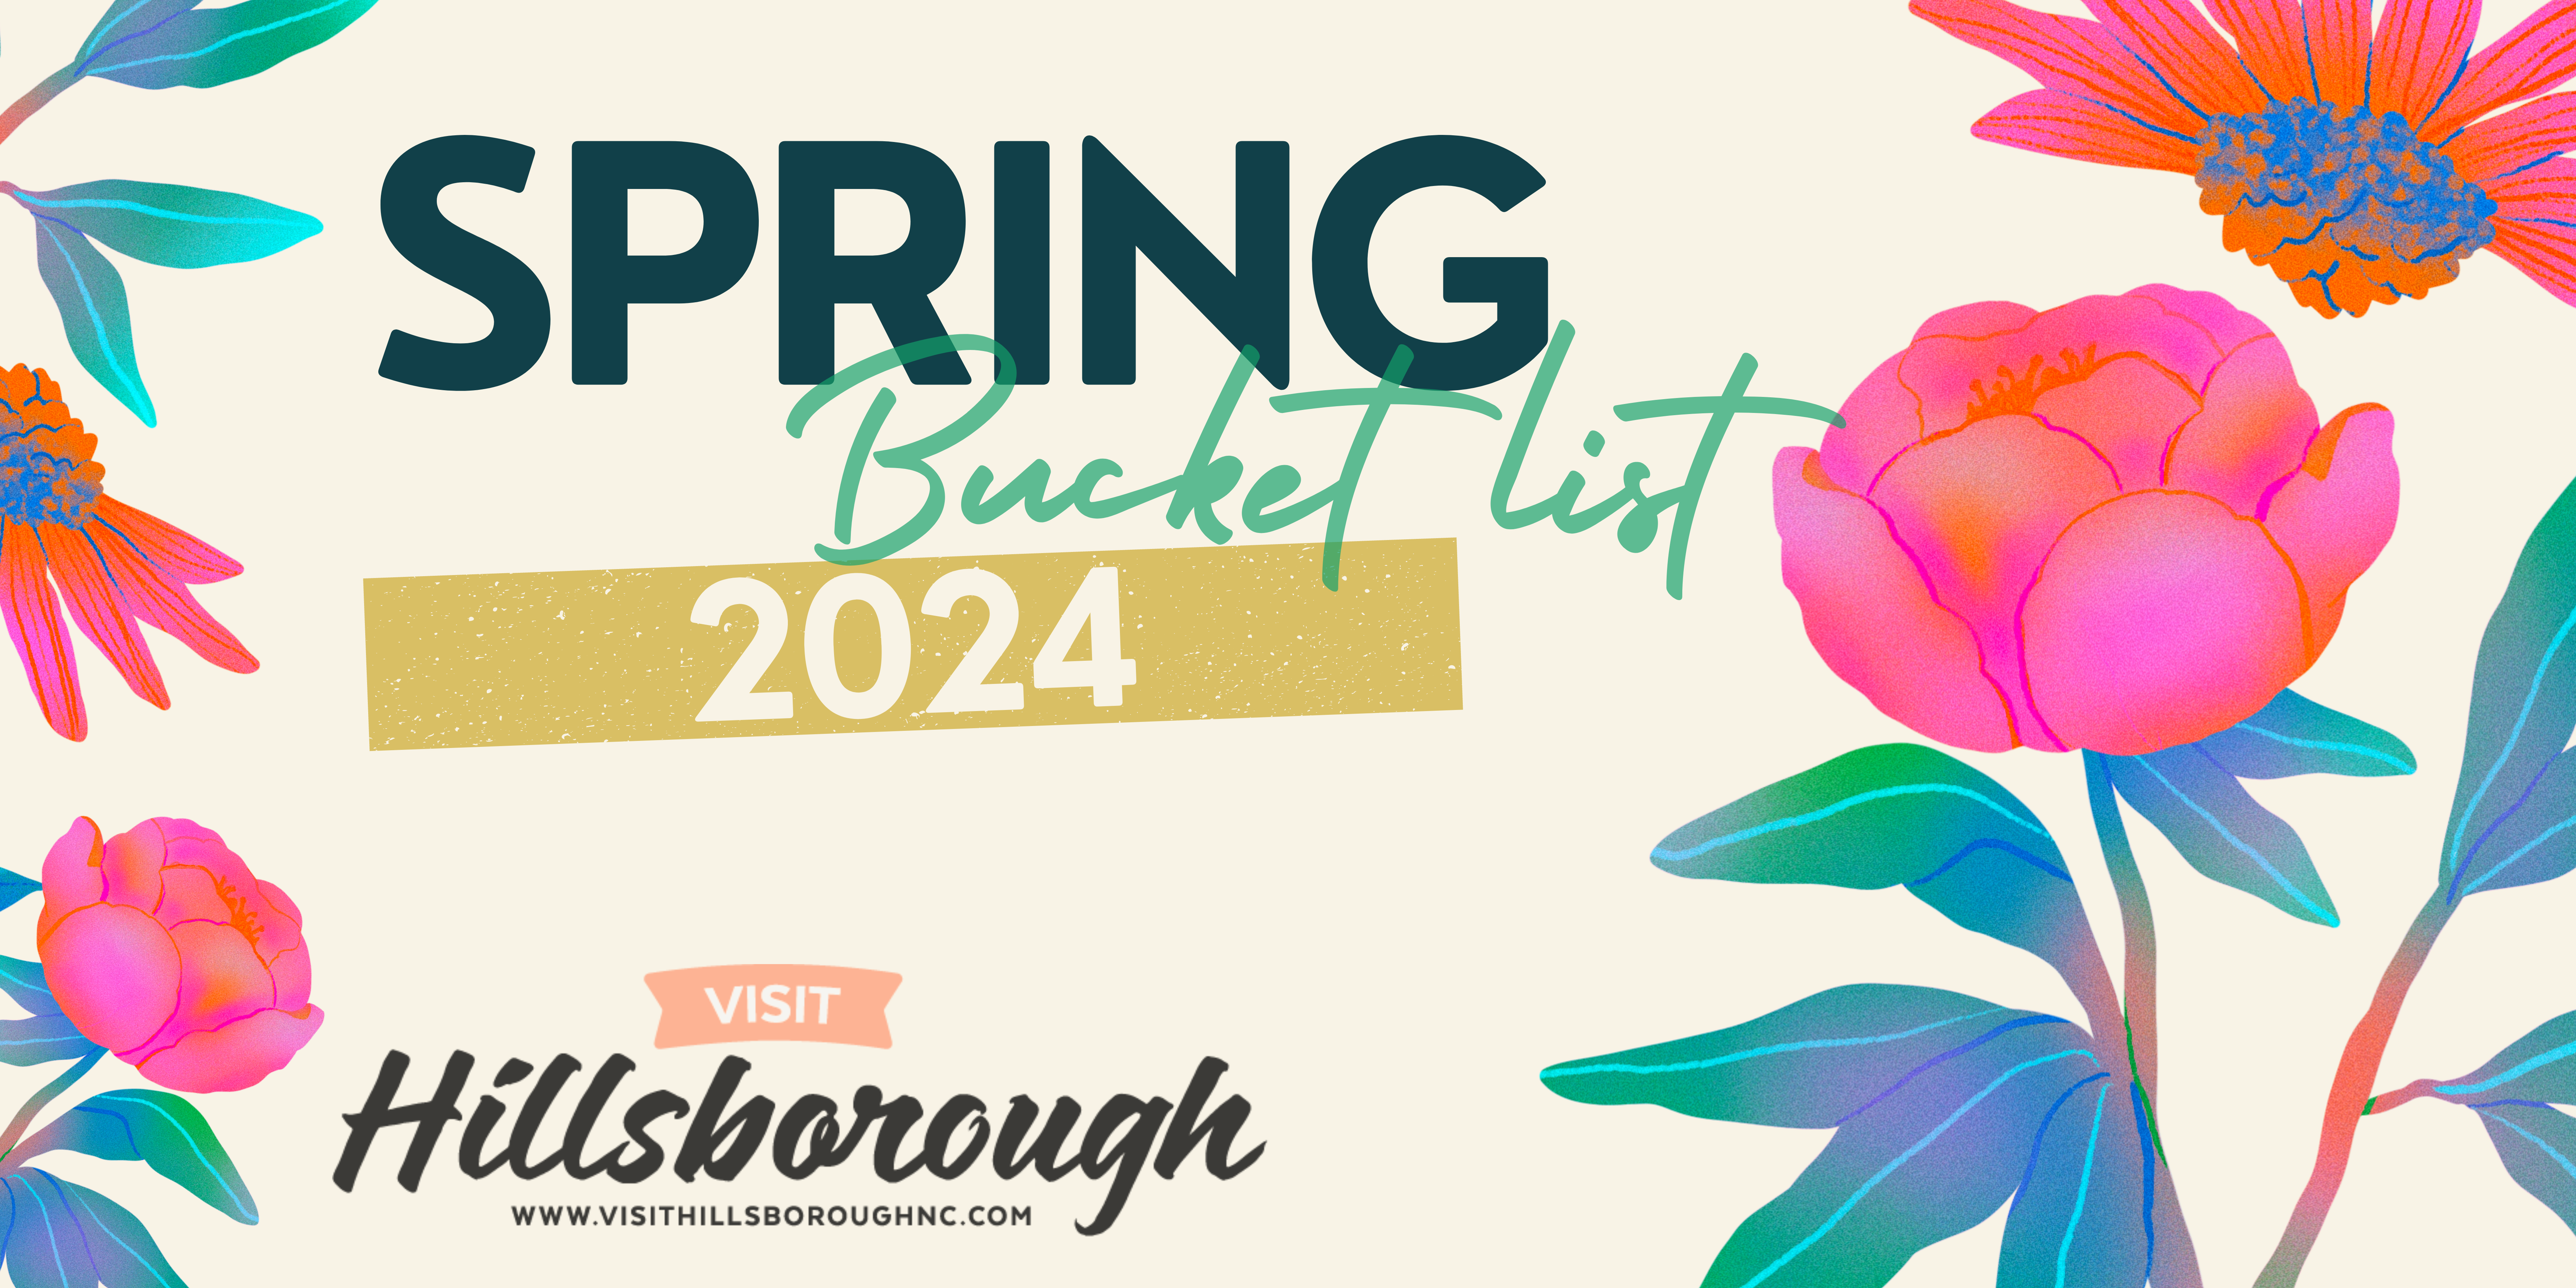 Spring Bucket List 2024